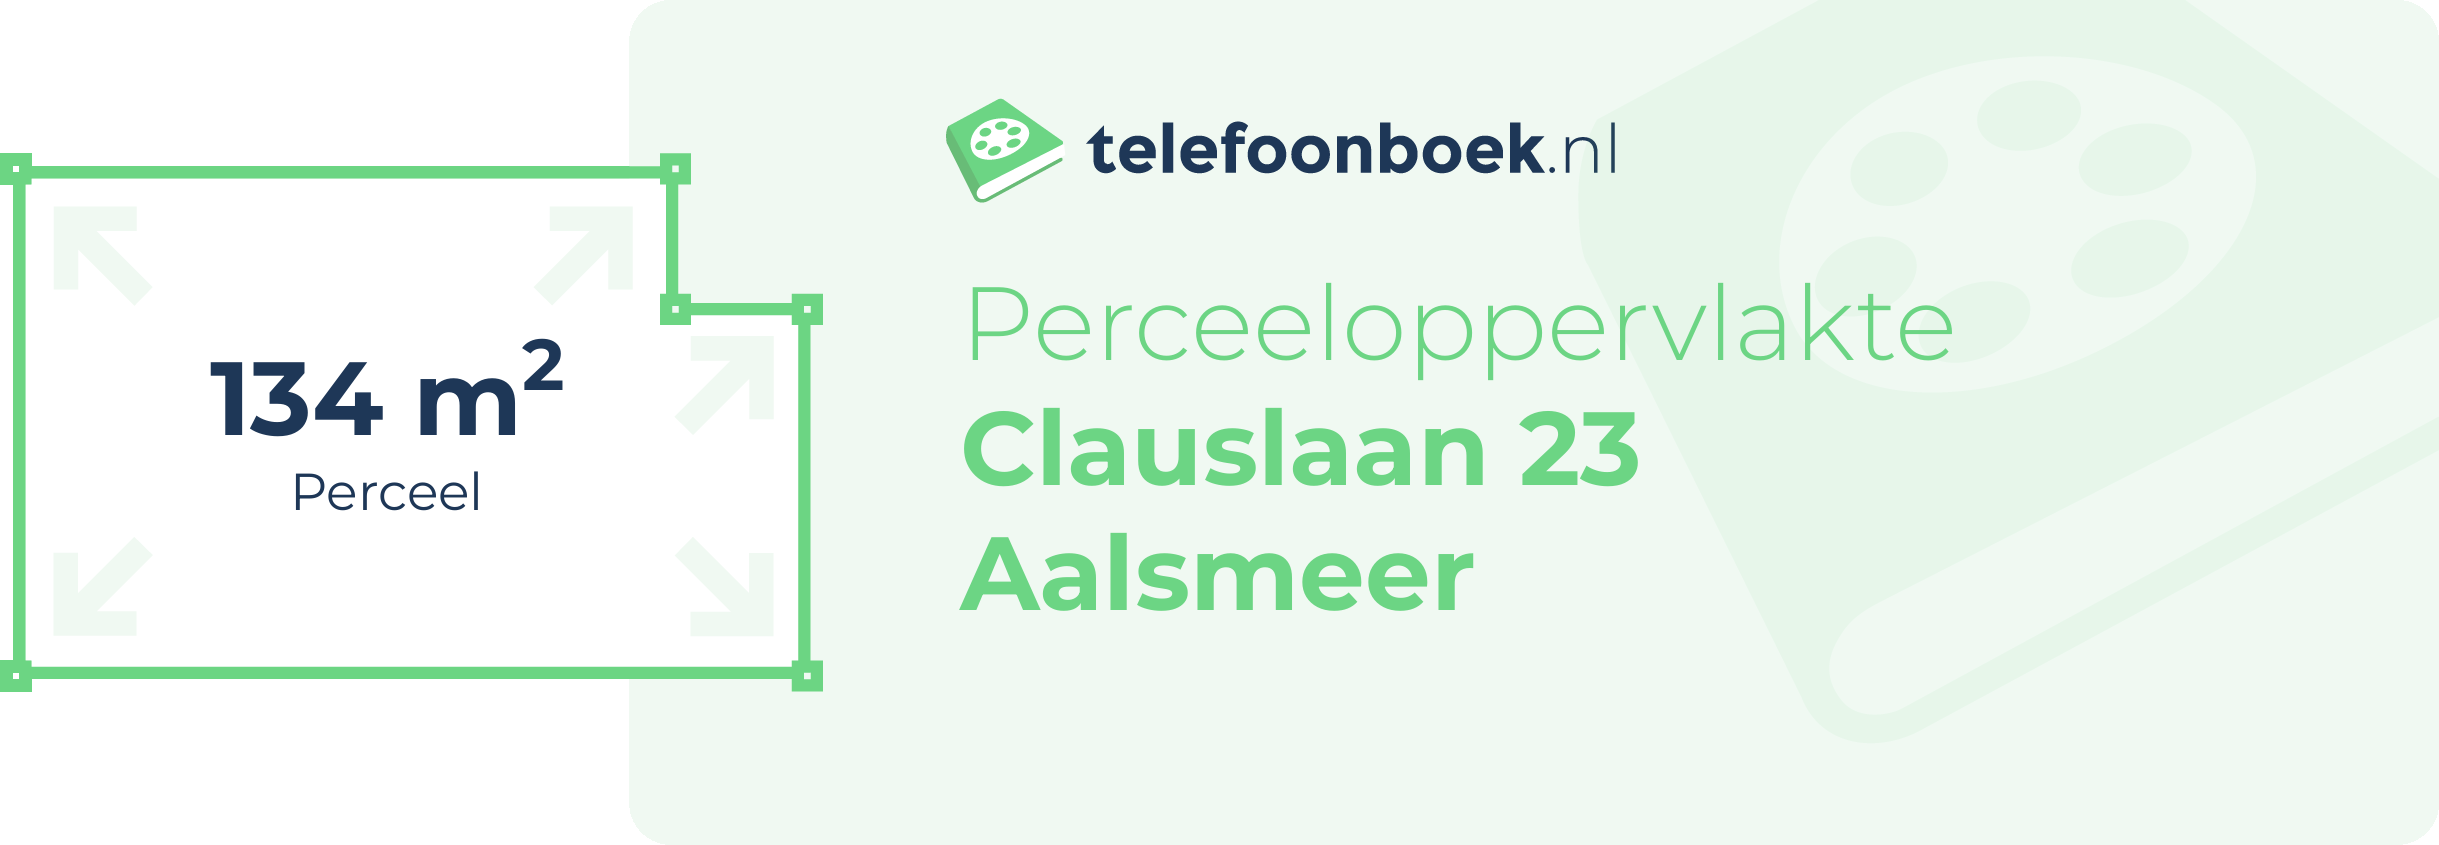 Perceeloppervlakte Clauslaan 23 Aalsmeer